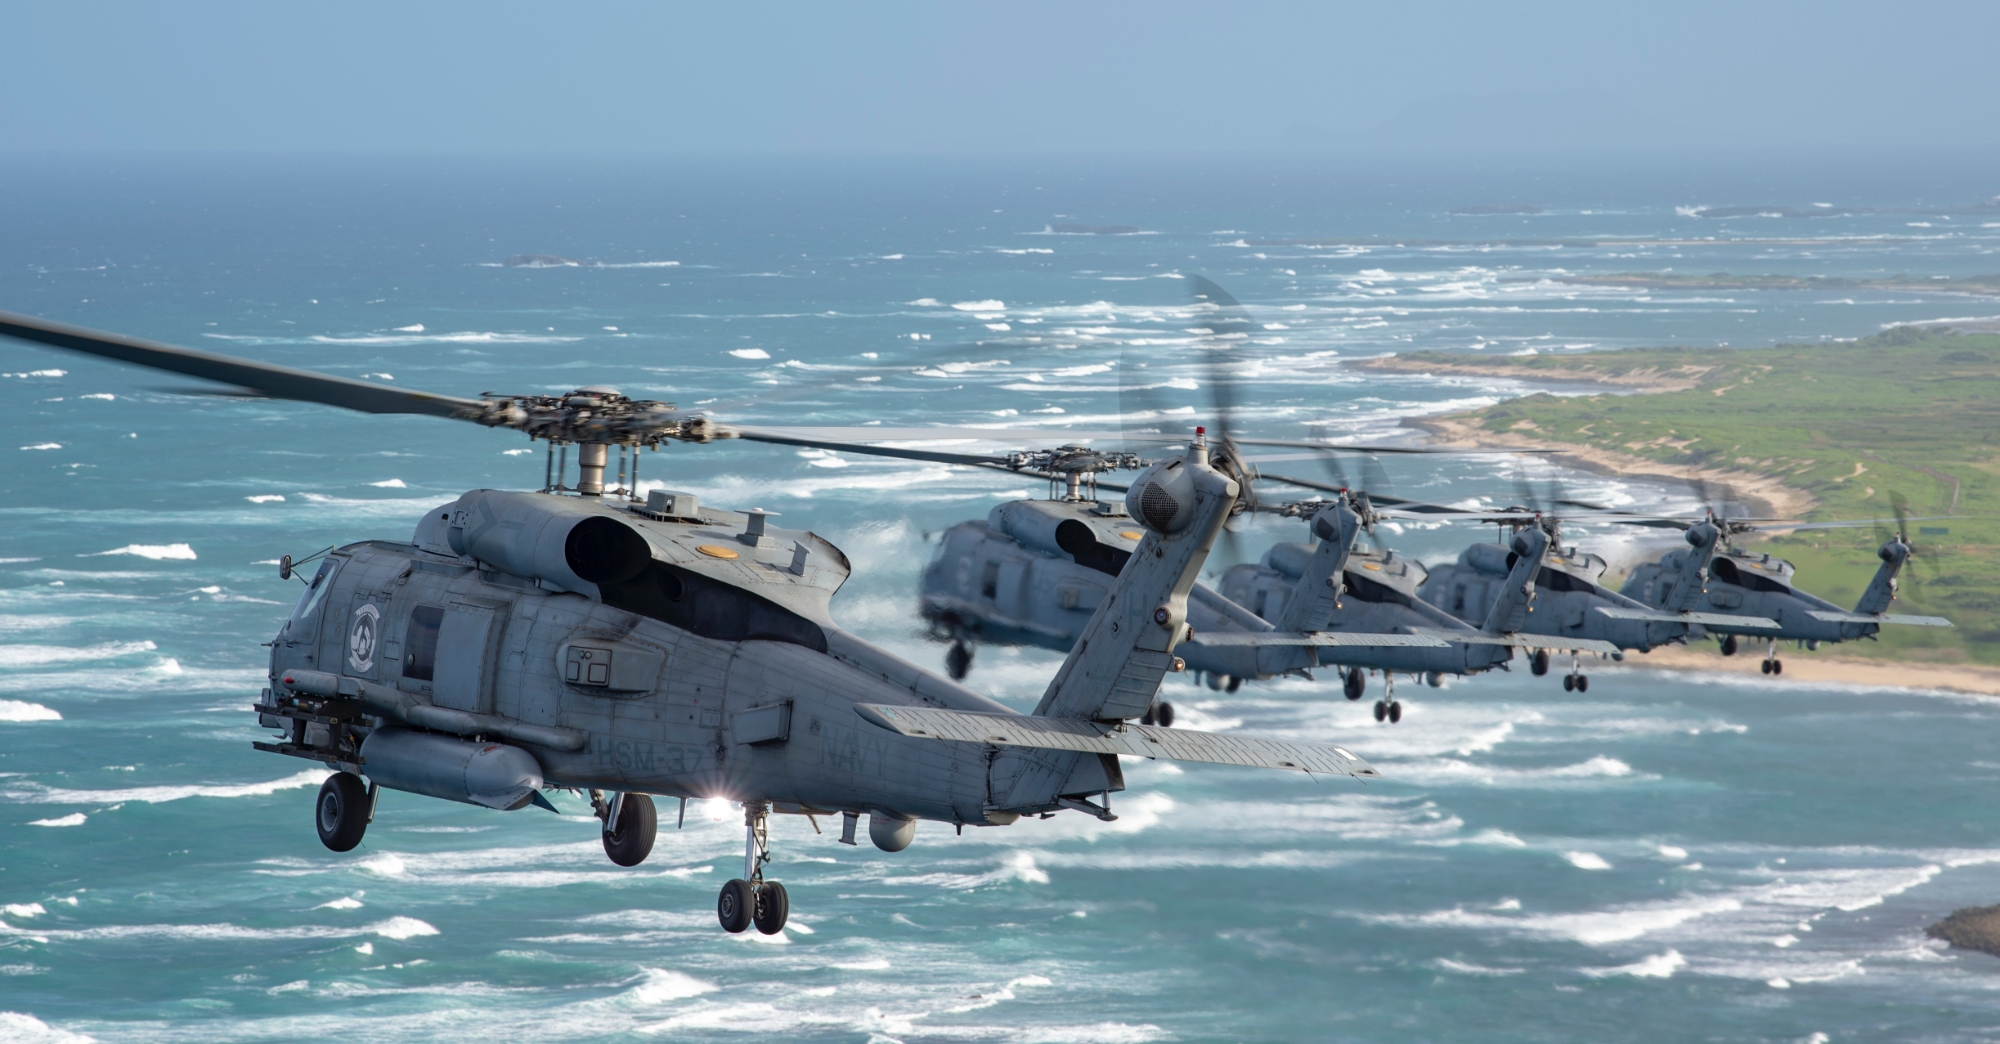 Kontrakt til 380 mio. dollars: Spanien bestiller 8 Sikorsky MH-60R Seahawk-helikoptere fra Lockheed Martin til erstatning for Sikorsky SH-3 Sea King-helikoptere